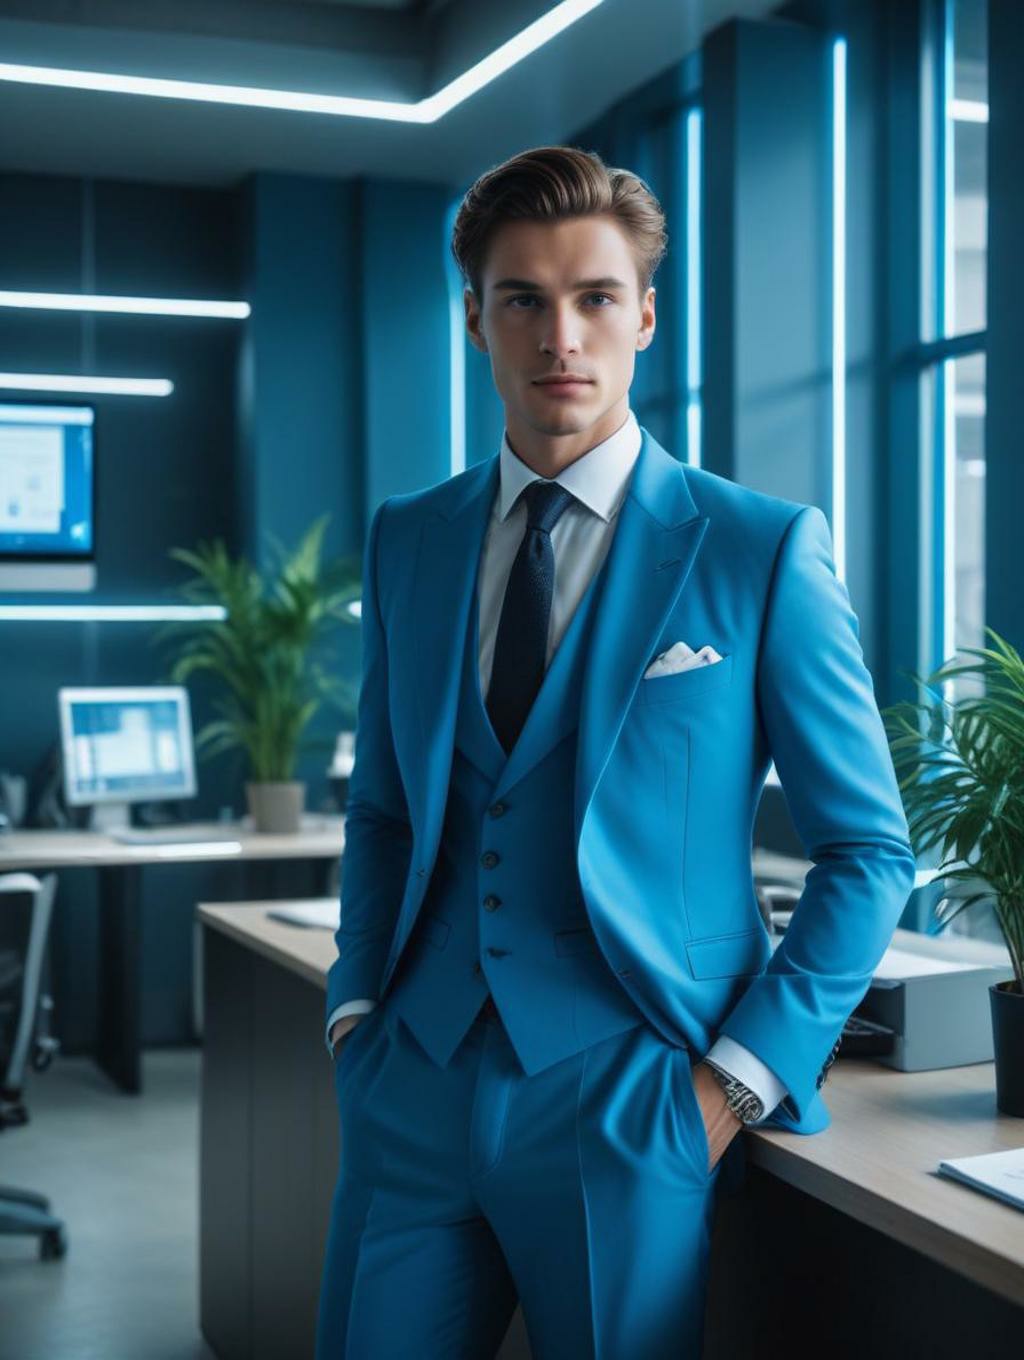 Business Men: Professional Portraits & Custom Frames-Theme:6